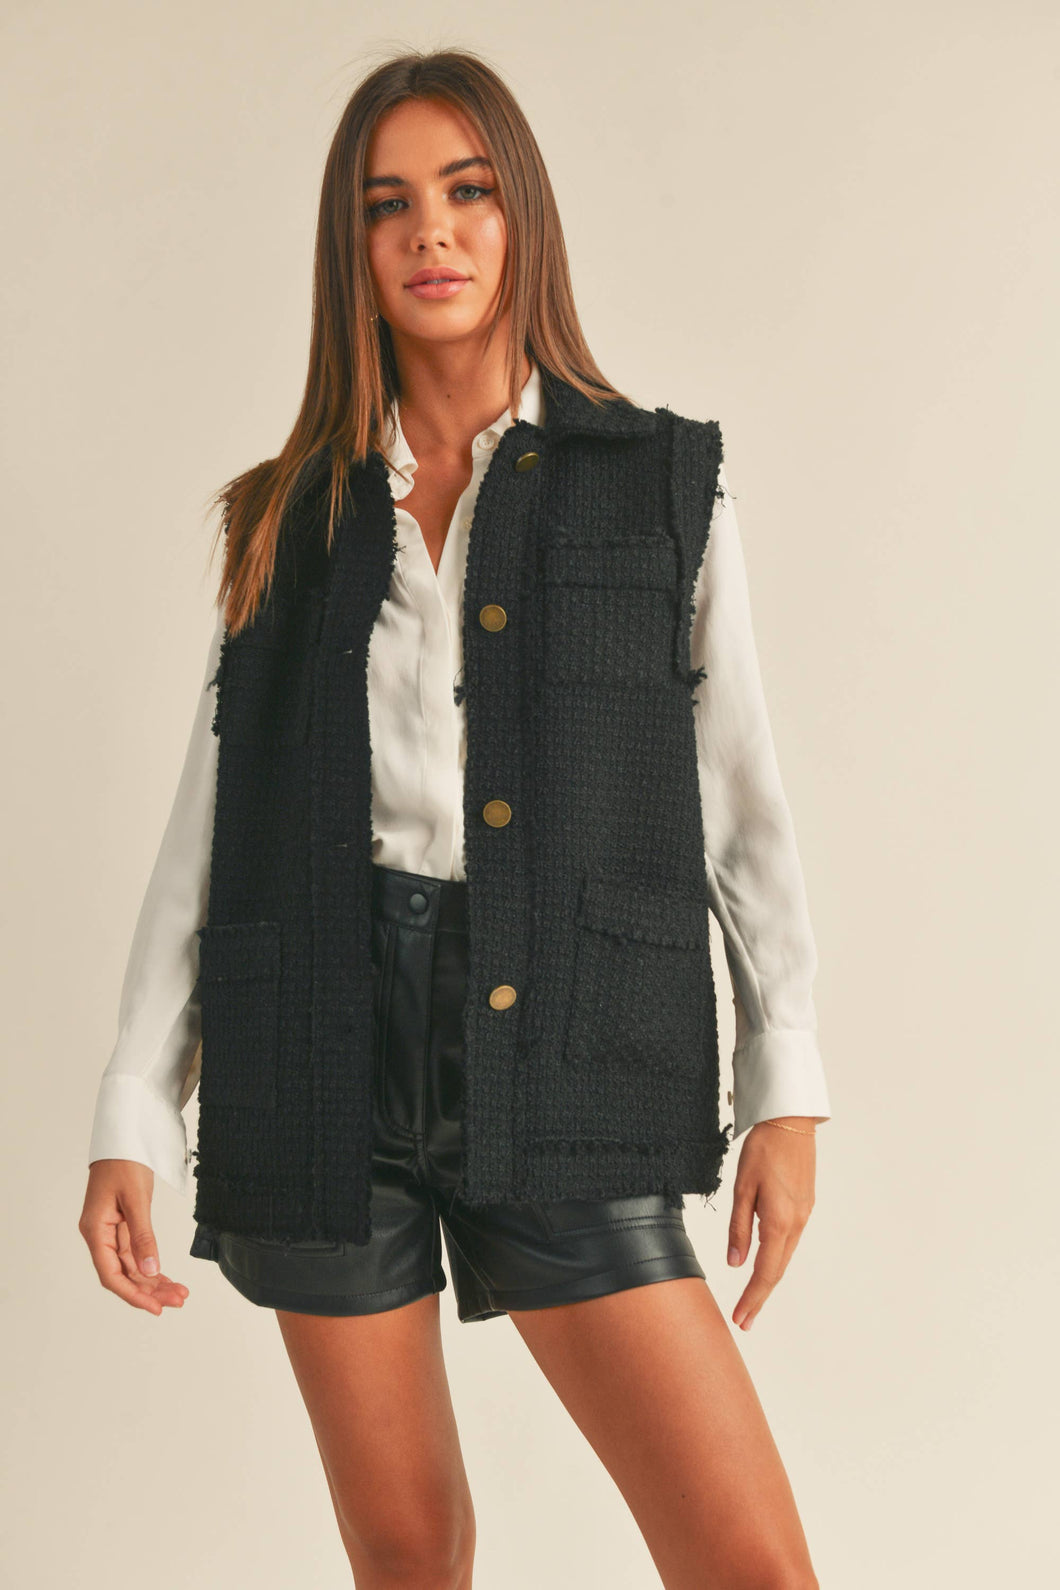 City Chic Black Tweed Vest